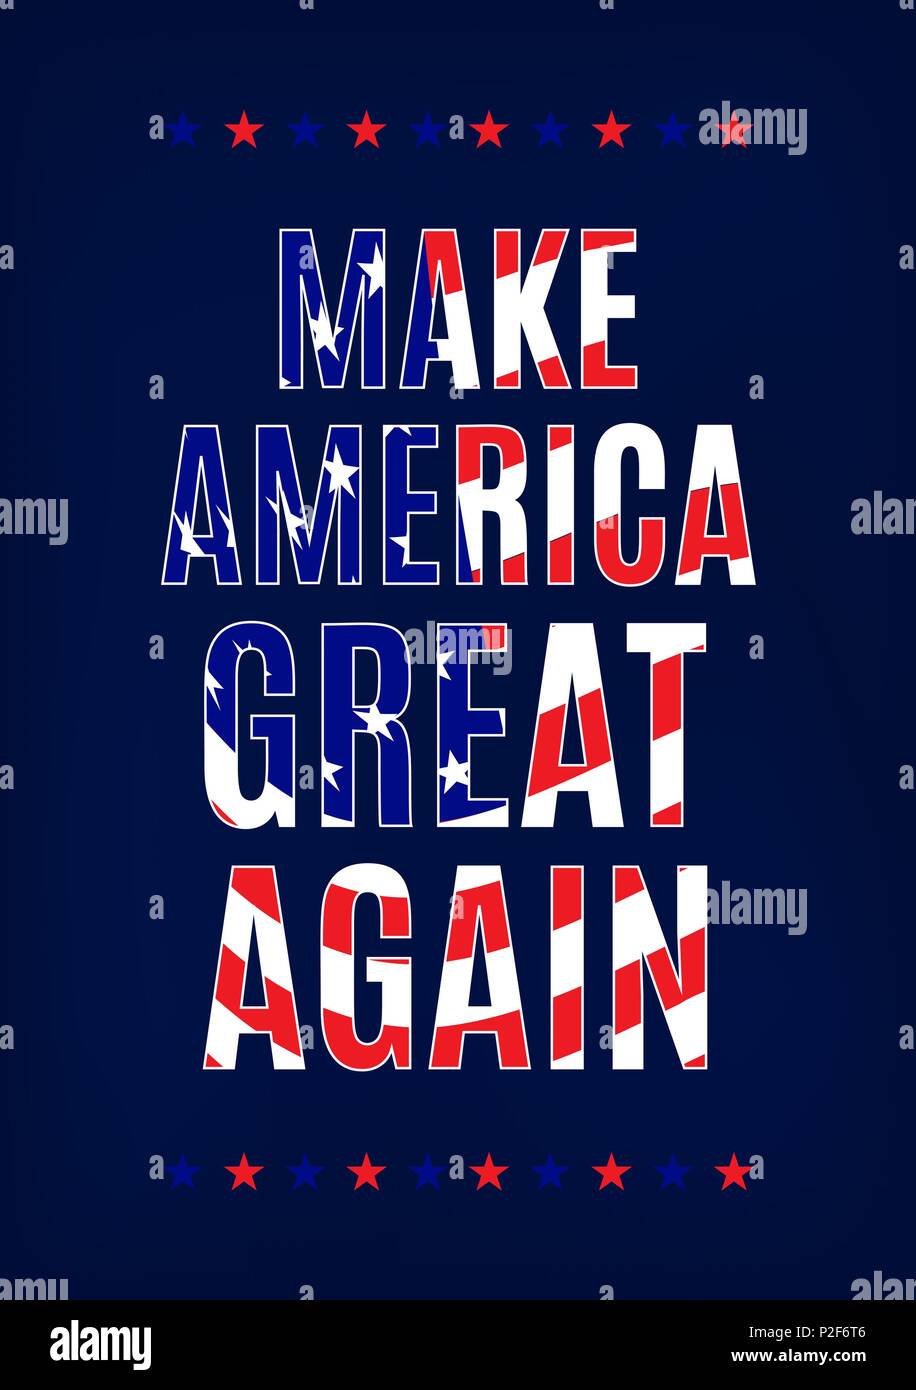 Make America great again card template illustration Stock Vector